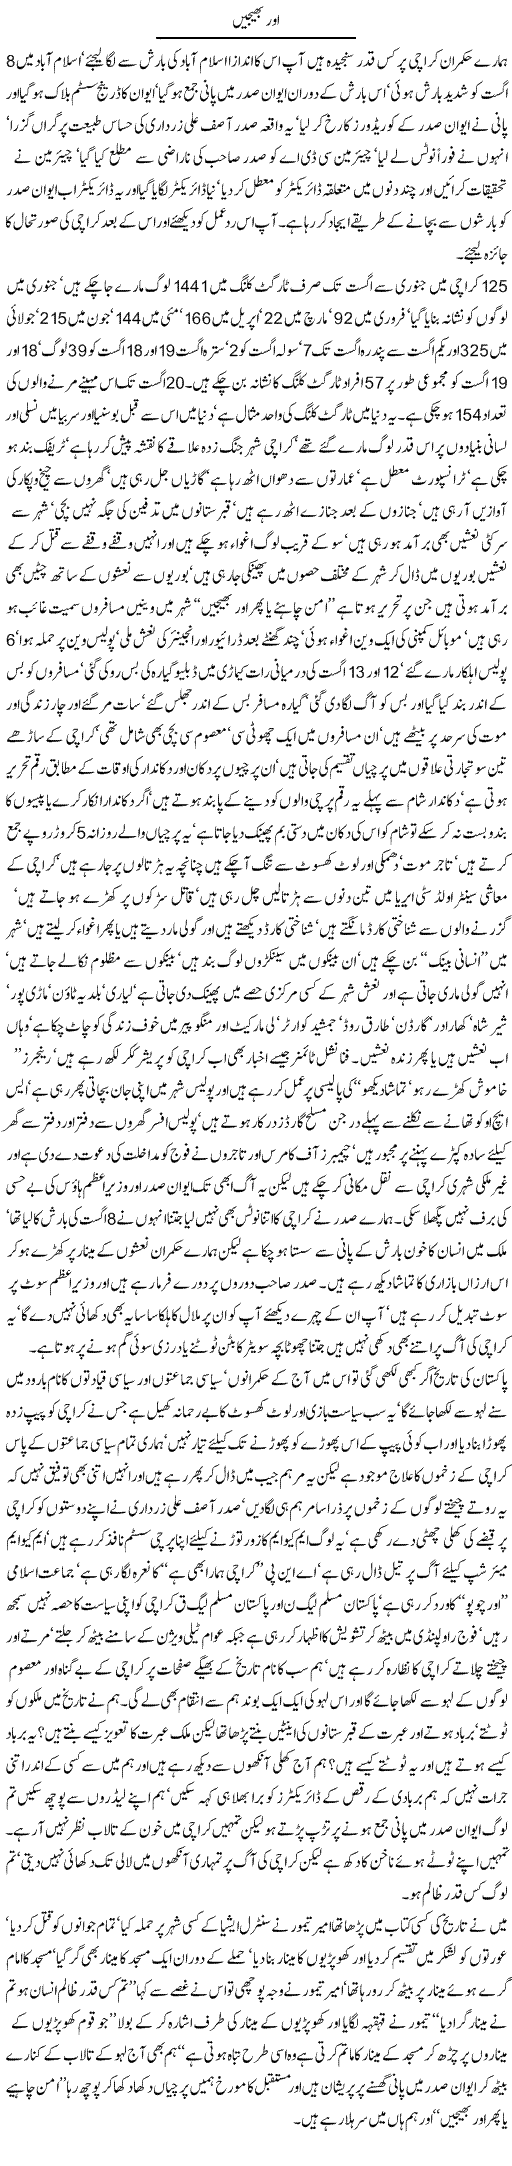 Karachi Situation Express Column Javed Chaudhry 21 August 2011